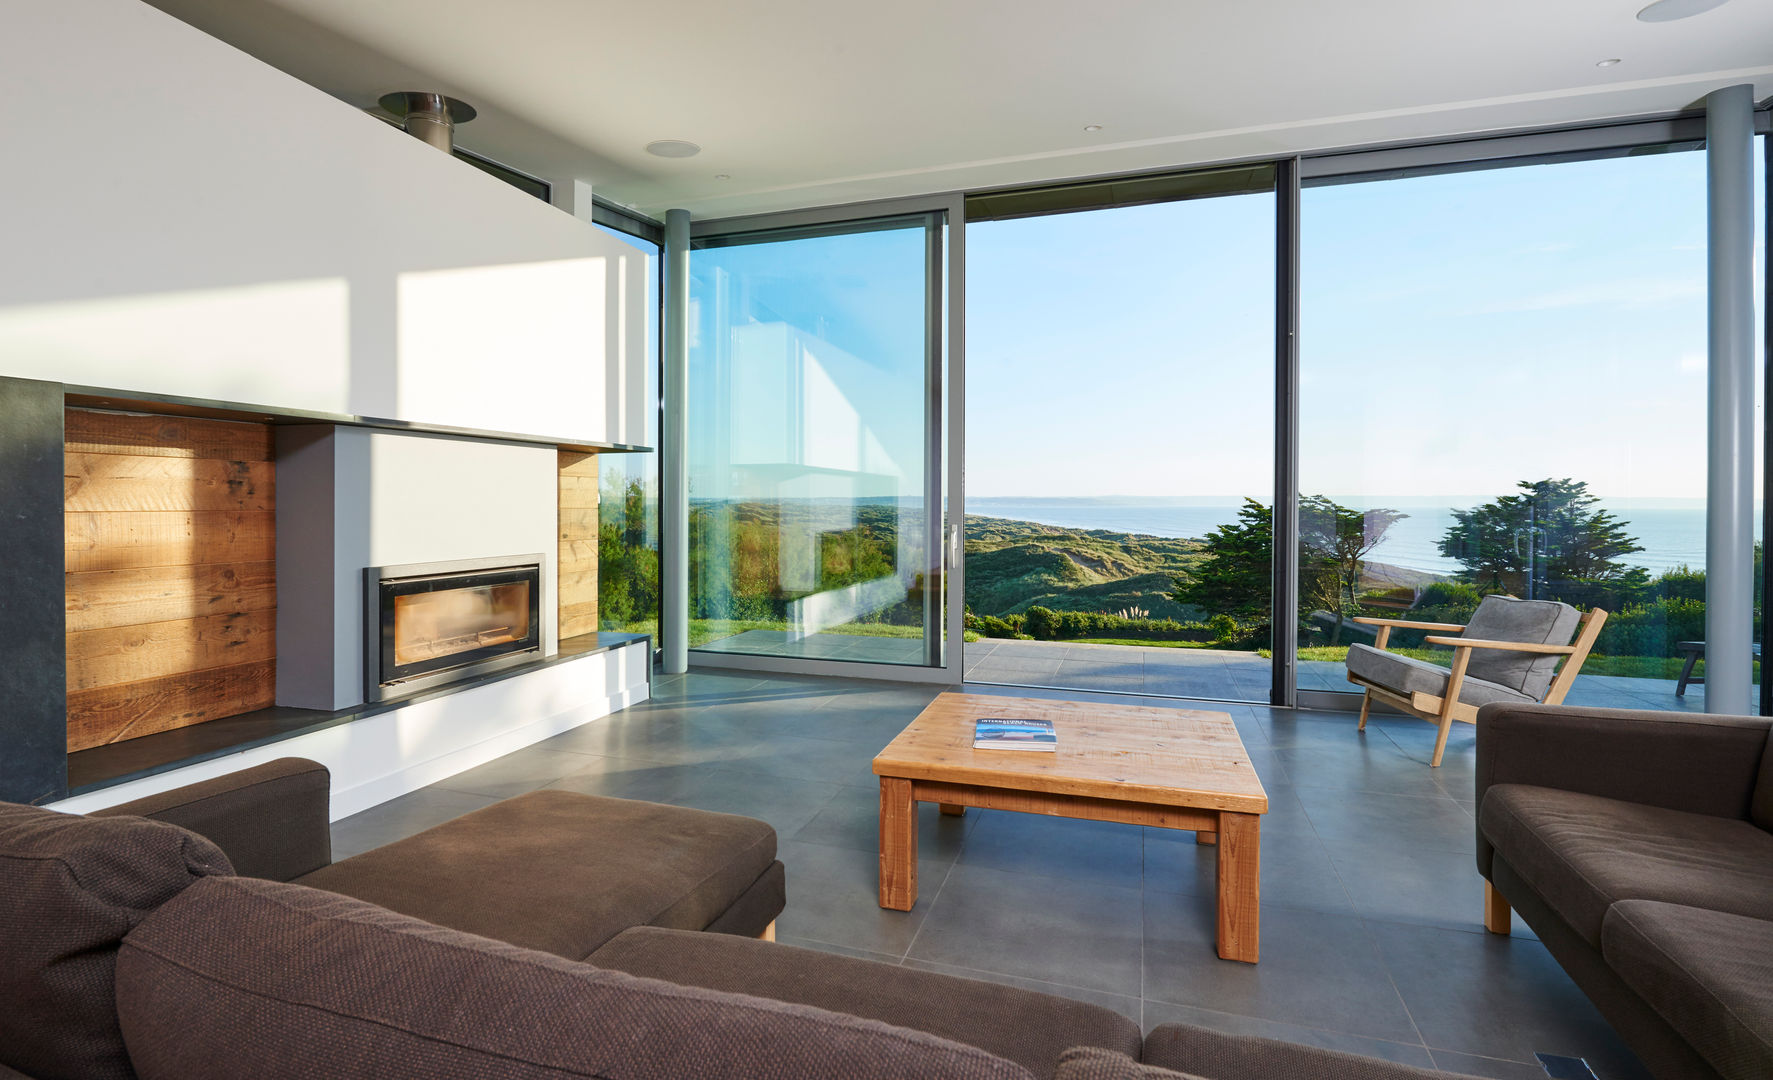 Sandhills Open Plan Living Room with Stunning Views Barc Architects Salas modernas